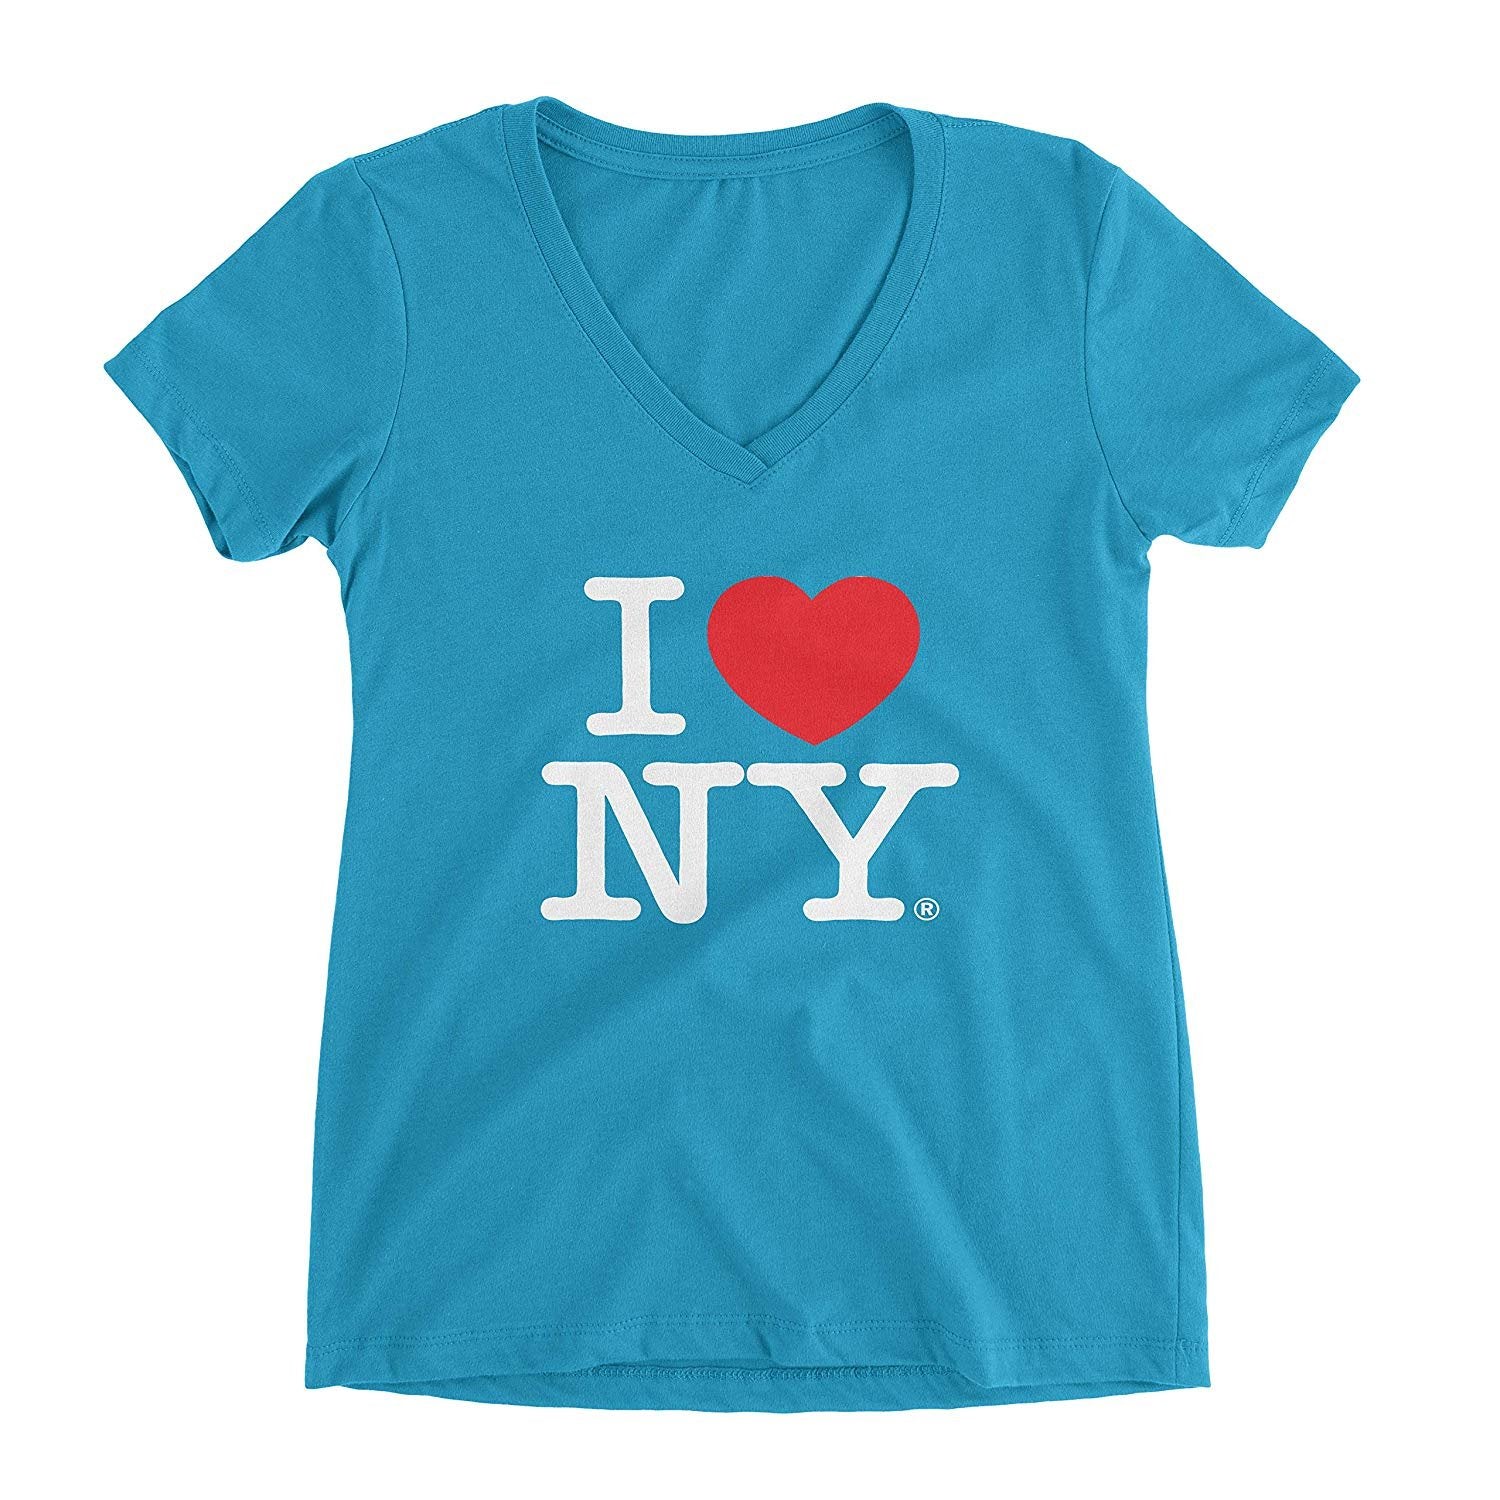 I Love NY Womens V-Neck T-shirt Turquoise Tee Shirt Ladies